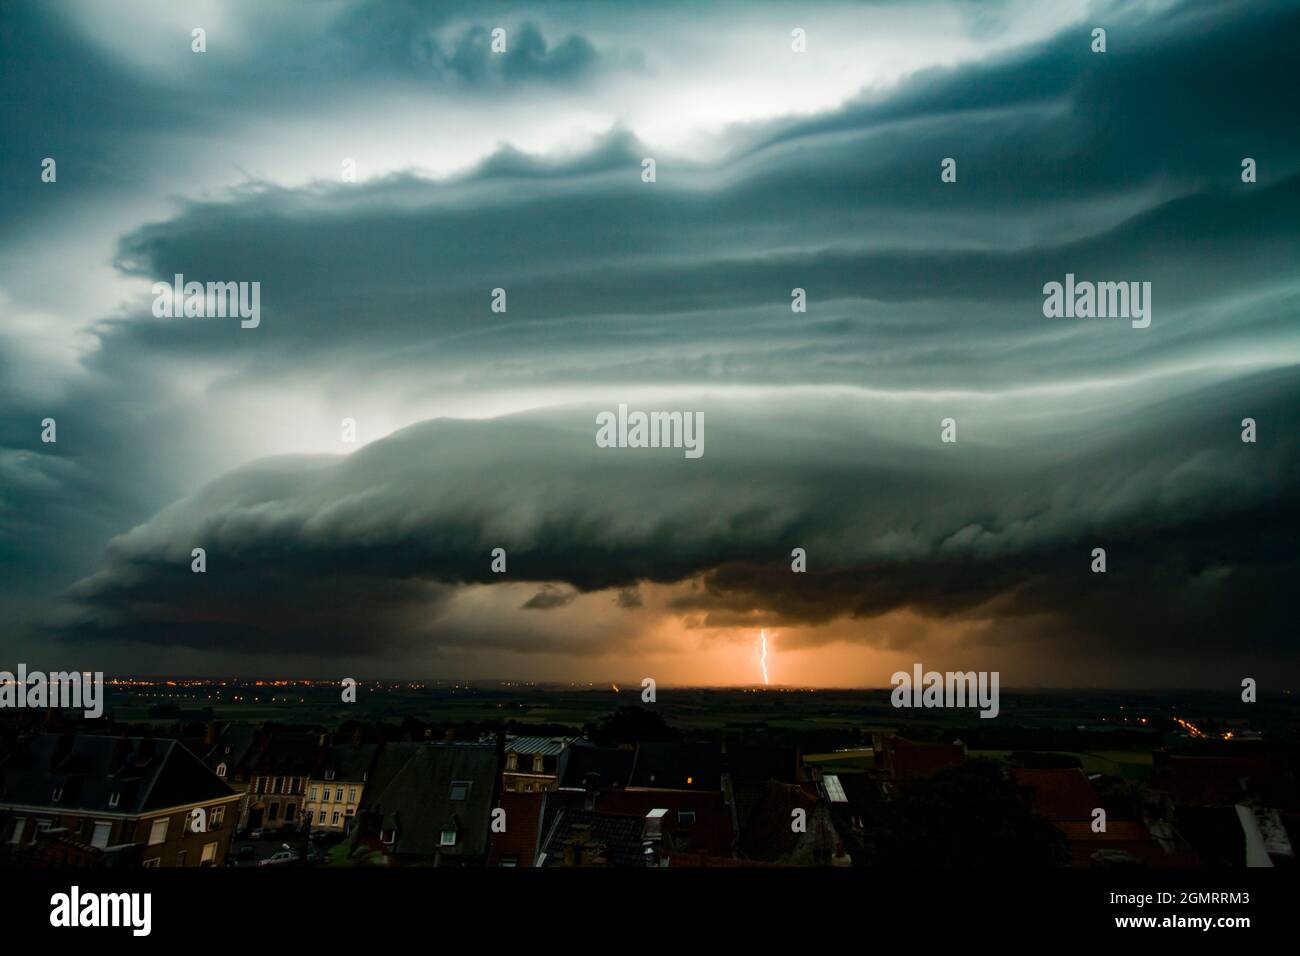 Lightning strike with shelf cloud Stock Photo